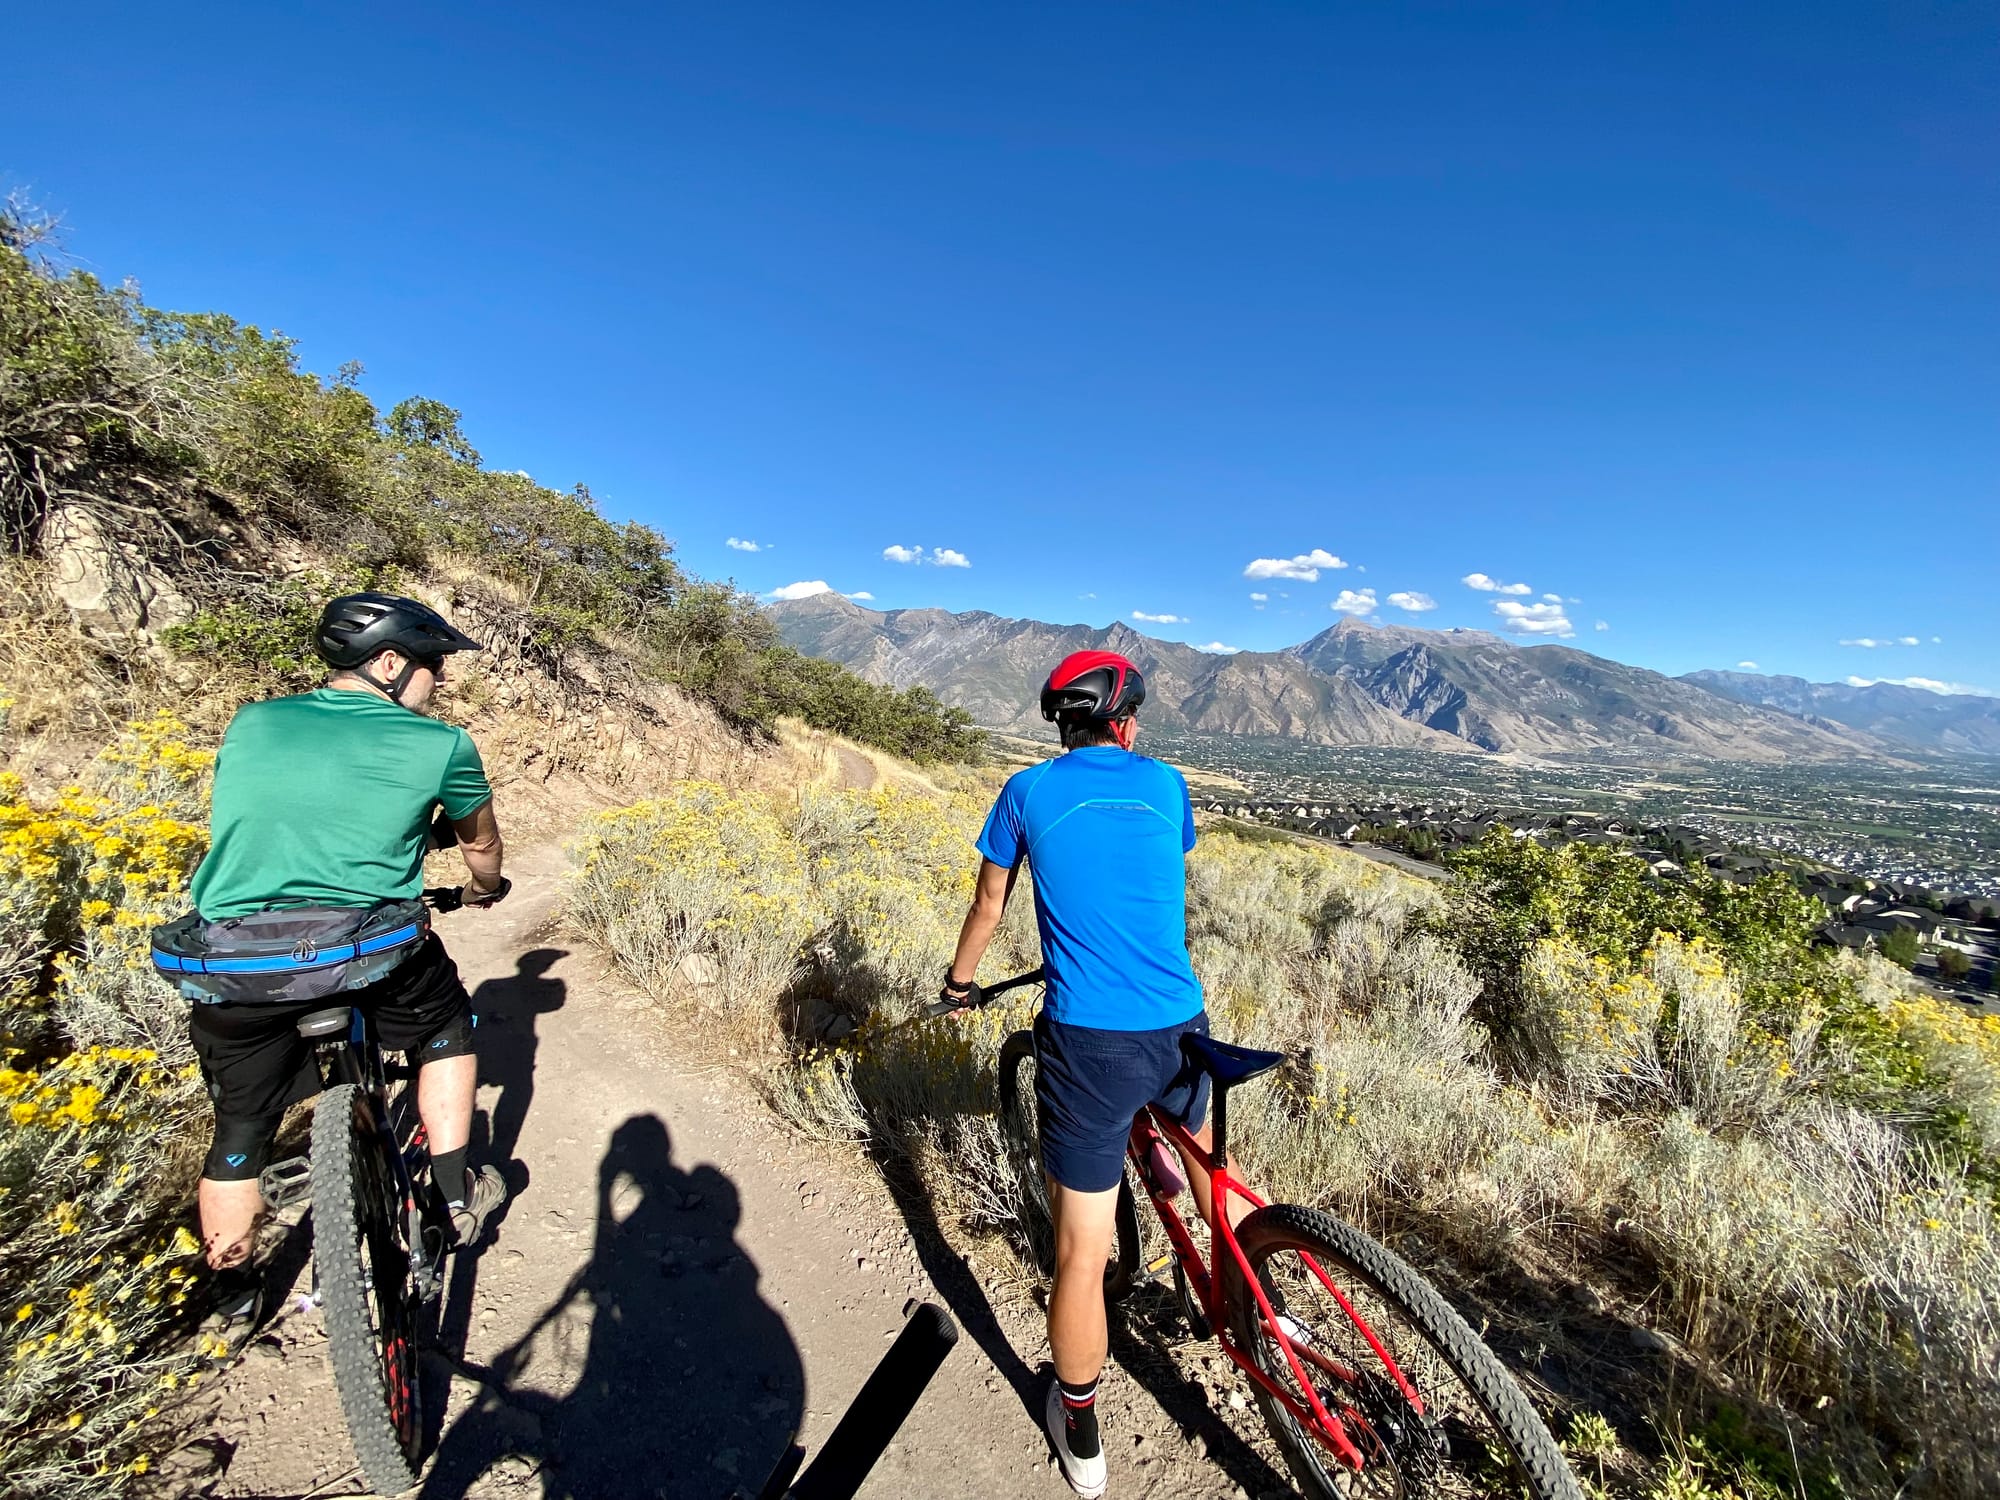 Keith and Yi mountain biking at Maple Hollow South in Utah